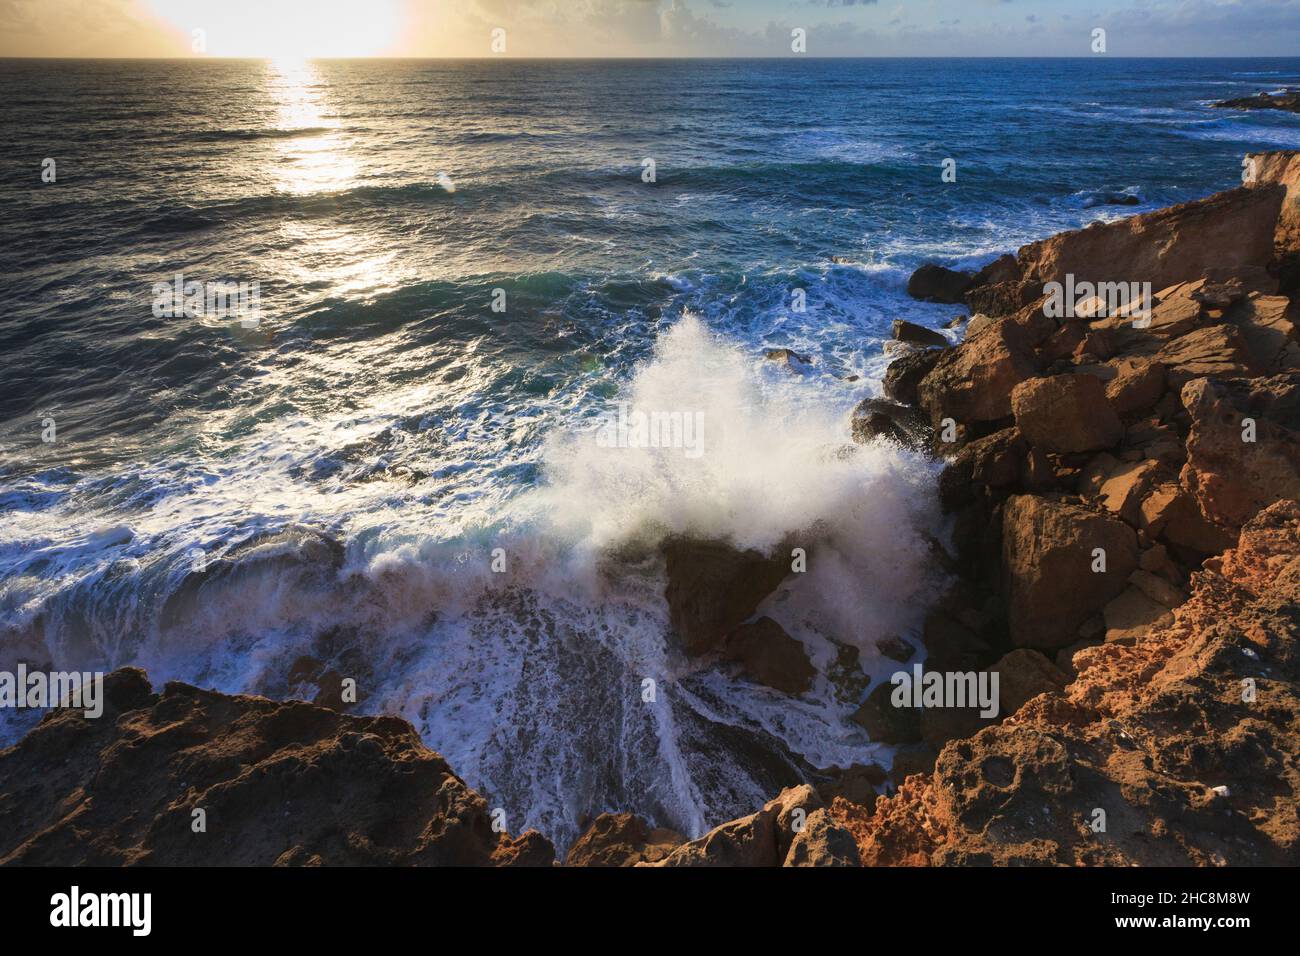 Sunset and waves crashing onto the rocky coastline in winter, Akamas peninsula, Island of Cyprus, eastern Mediterranean Stock Photo